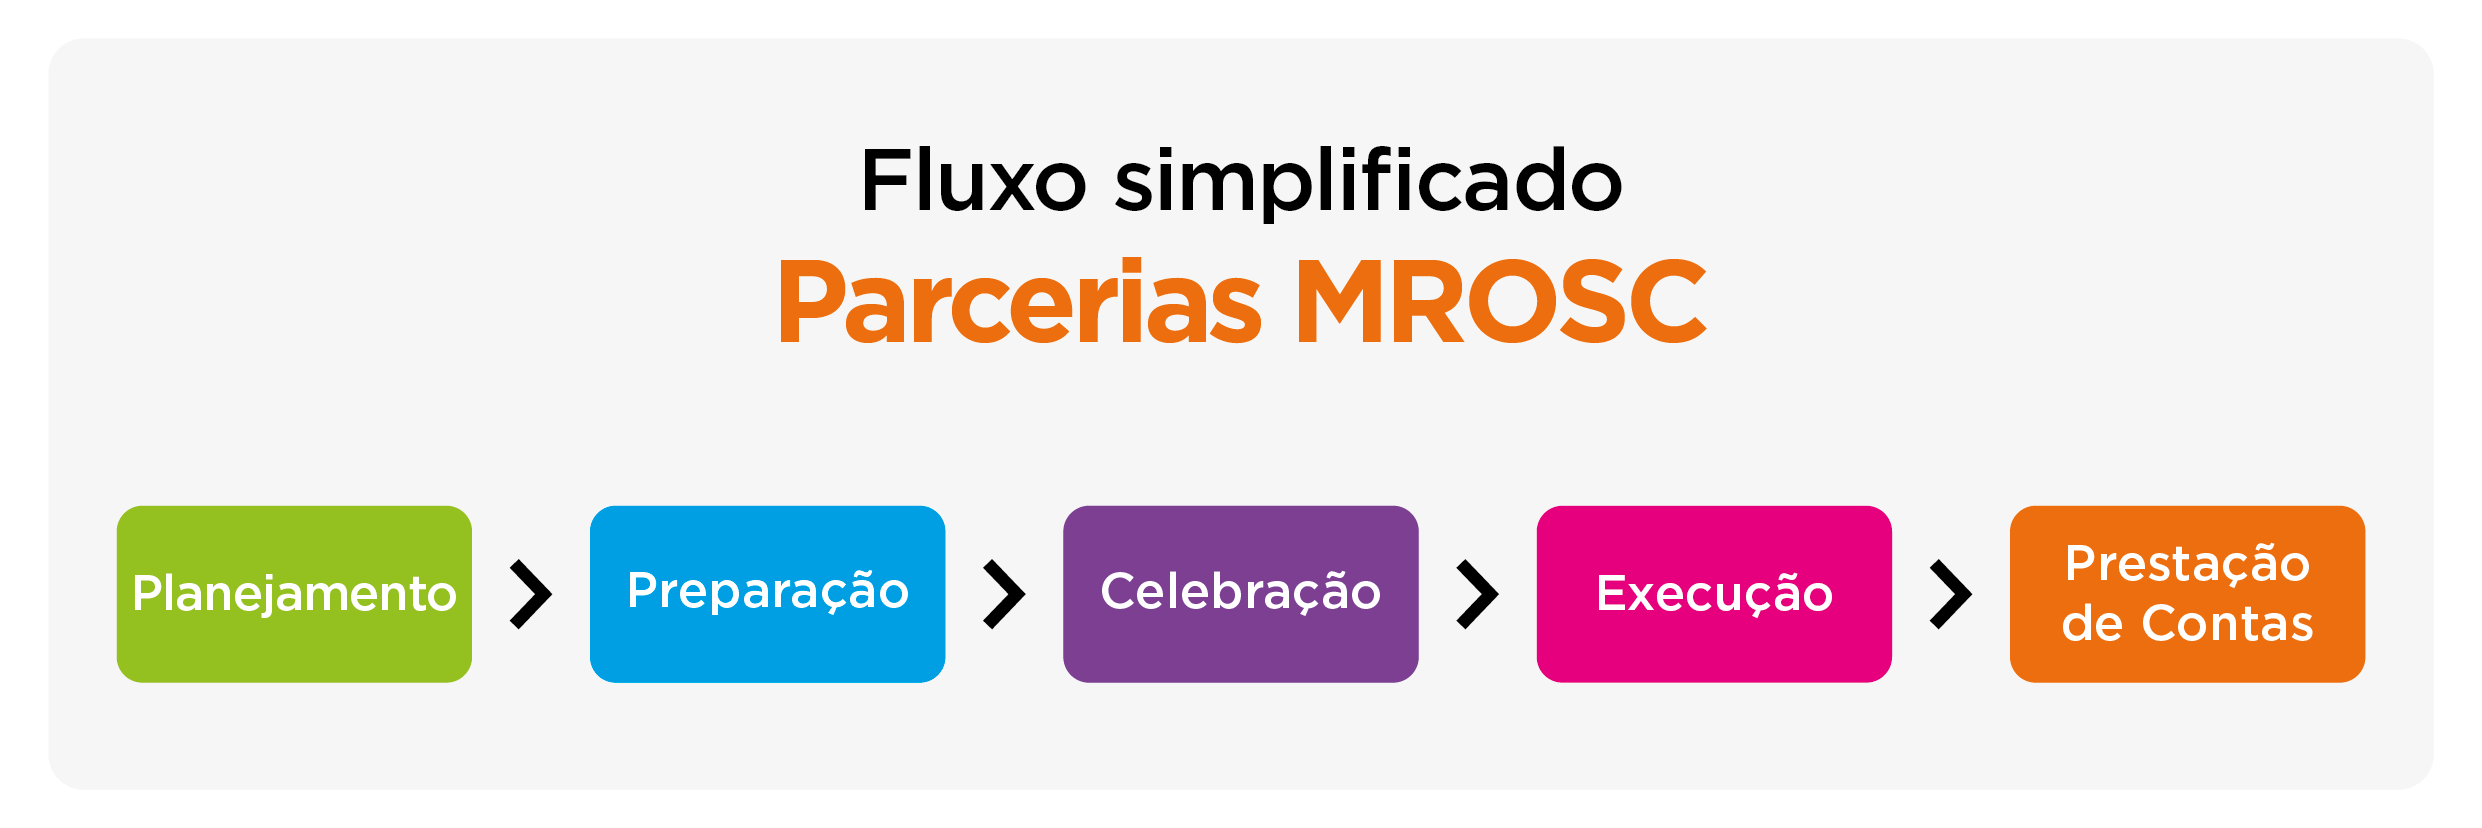 Fluxo - Parcerias MROSC -07